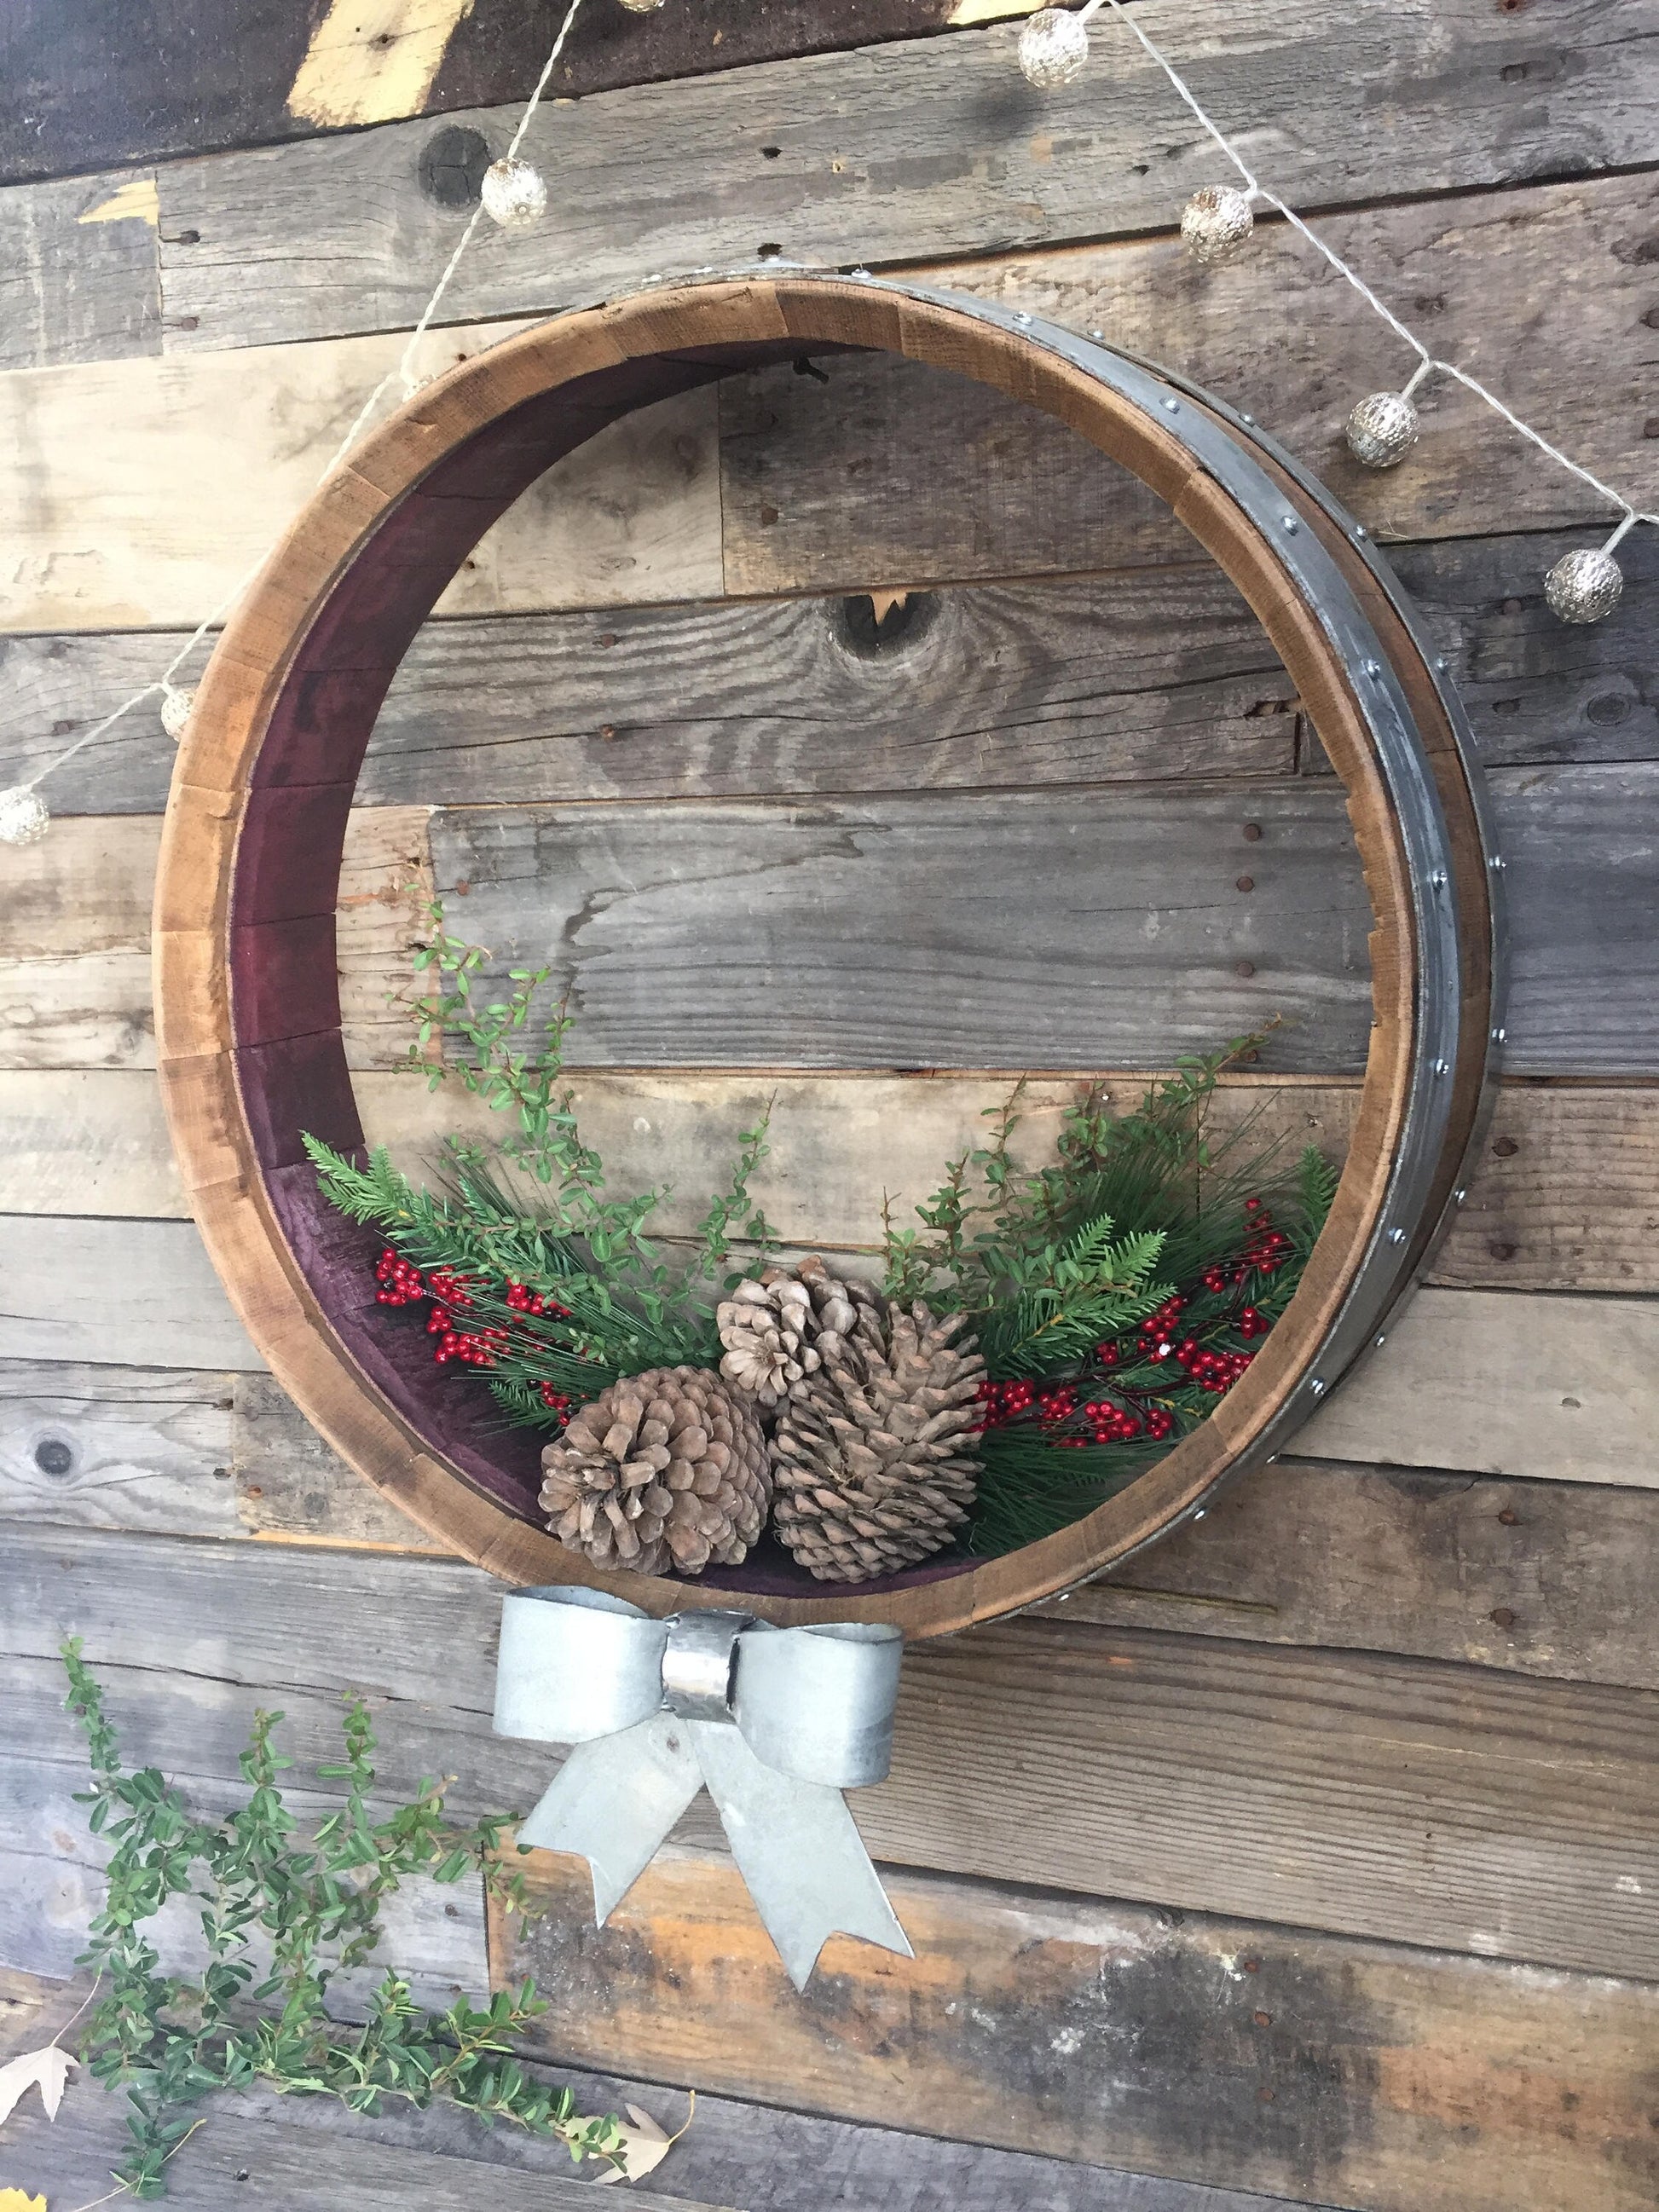 Wine Barrel Wall Wreath Door Hanger Holiday Display - Vairaa - Retired Napa Wine Barrel